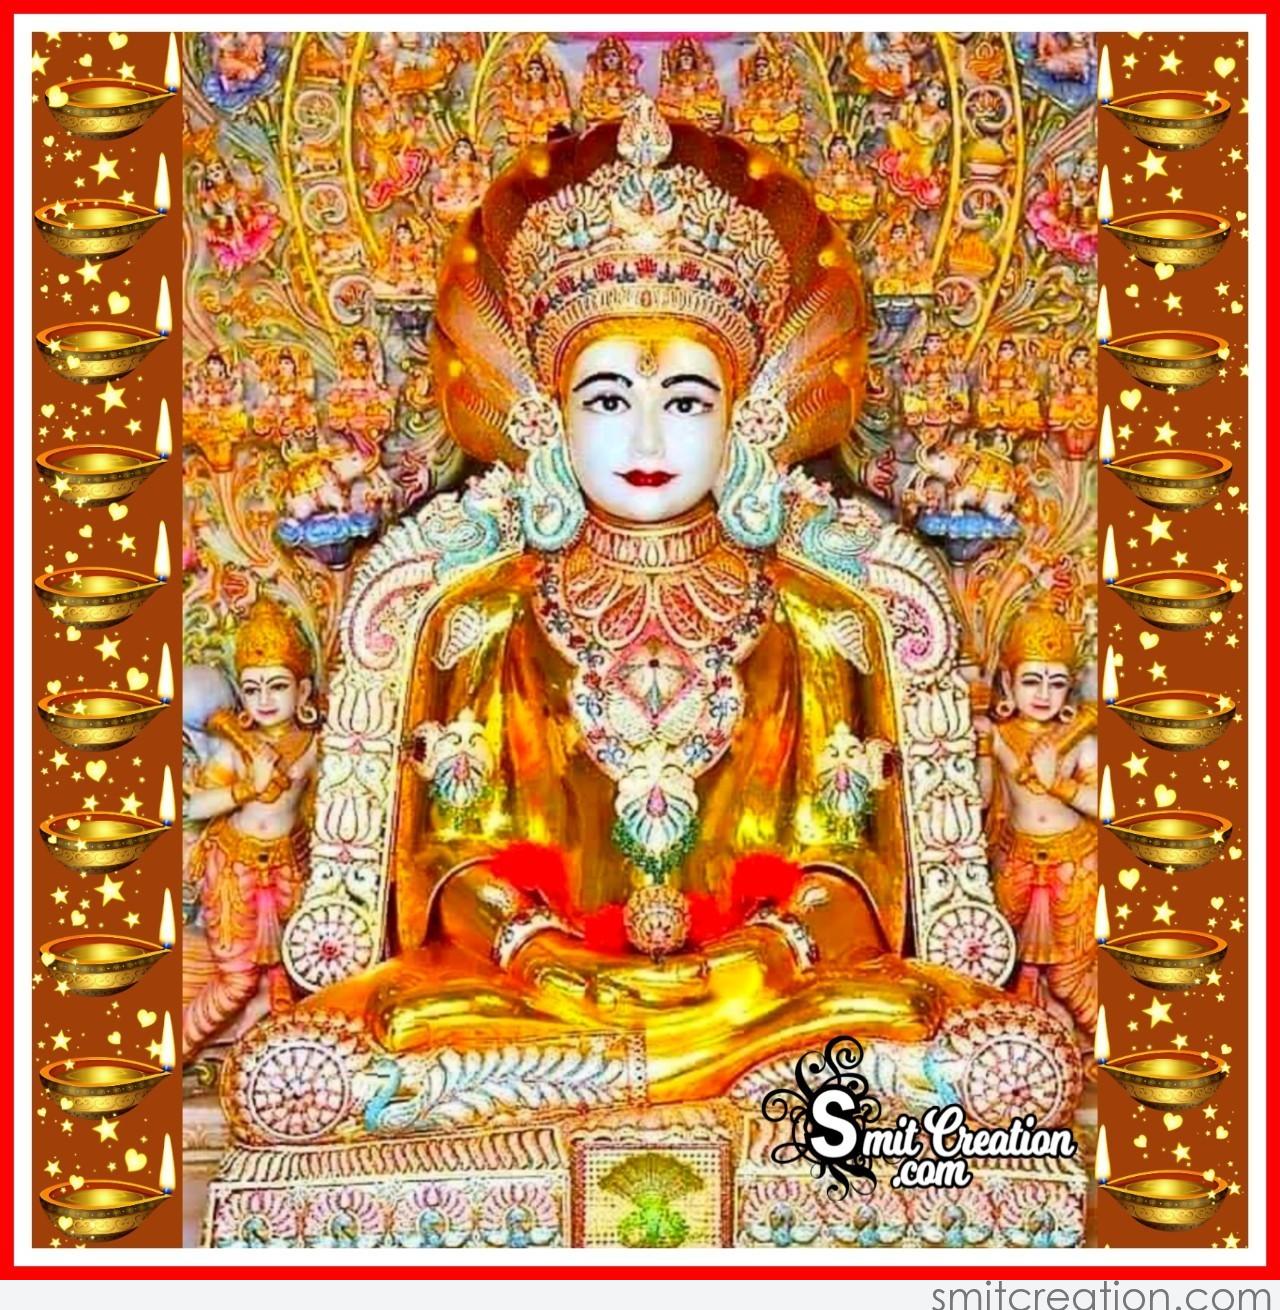 Mahavir Swami - SmitCreation.com